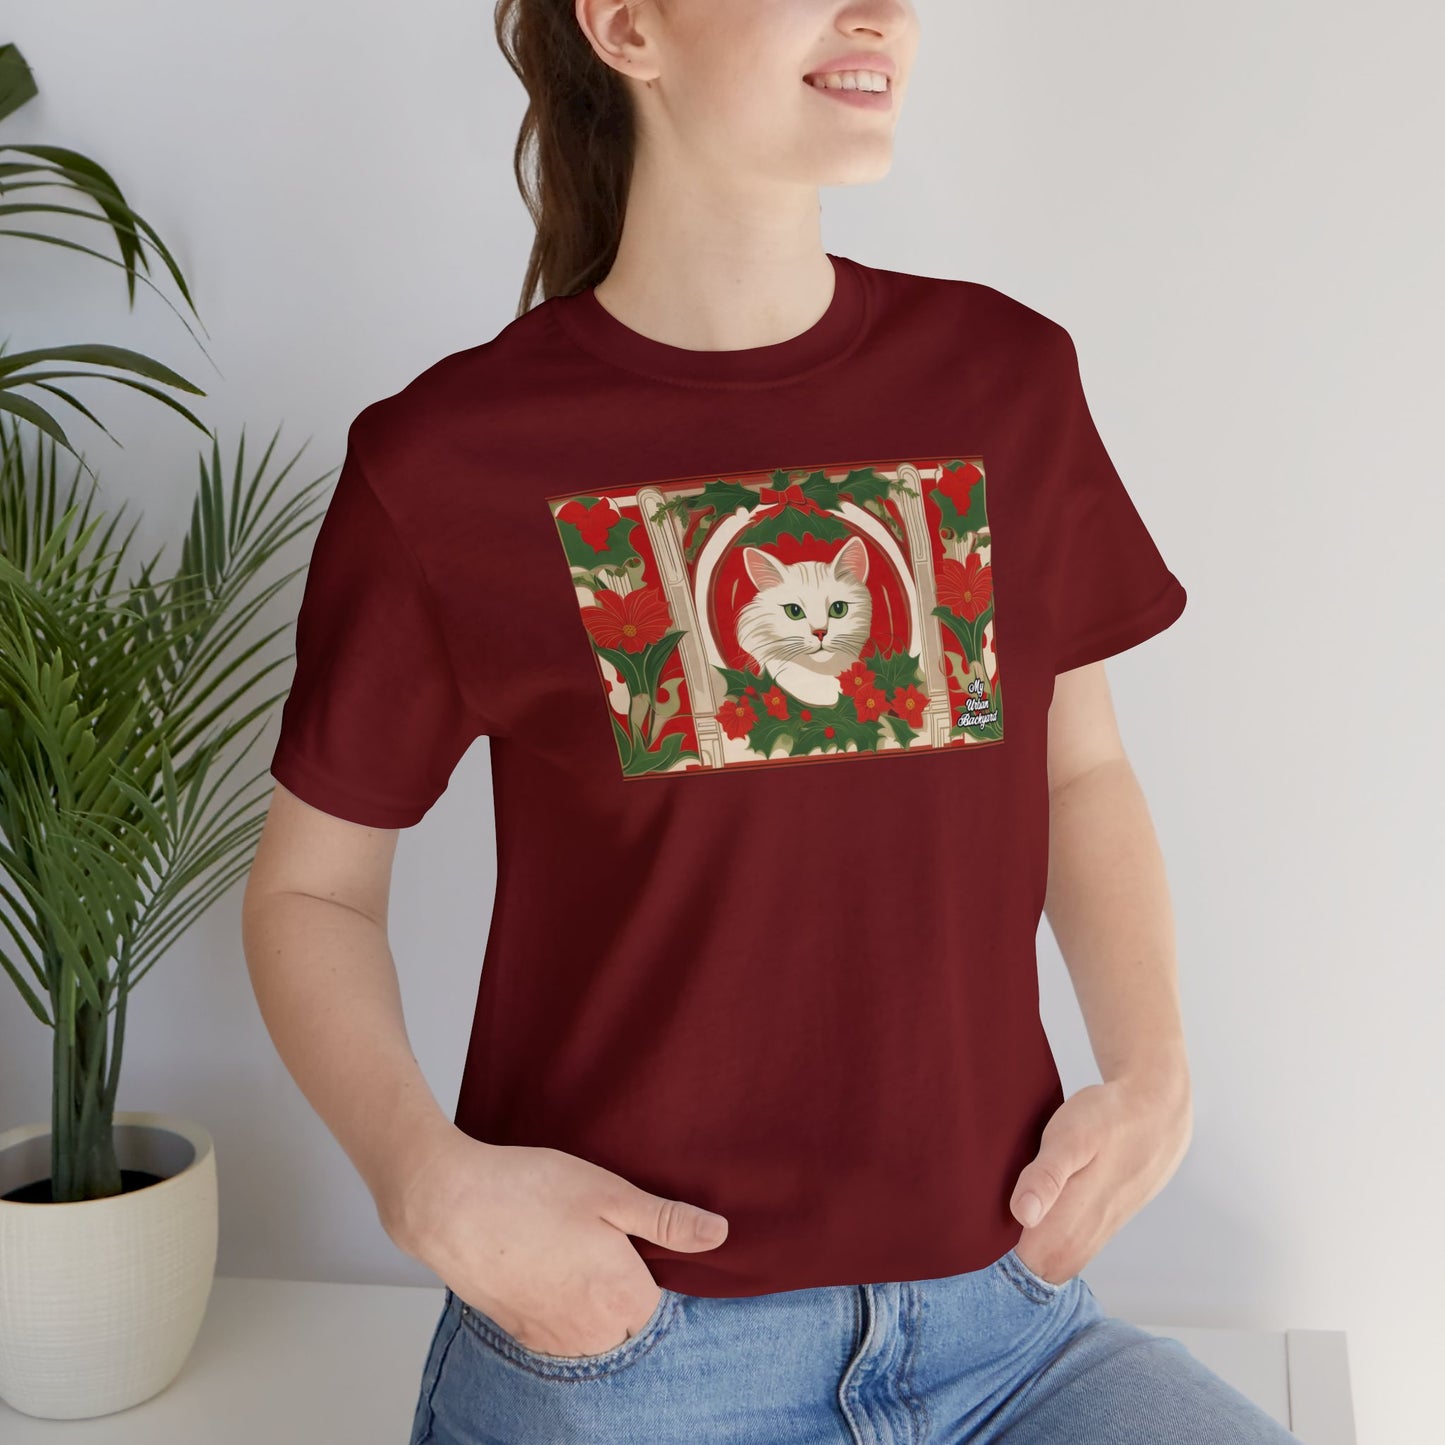 Soft T-Shirt, 100% Jersey Cotton, Unisex - Holiday Cat